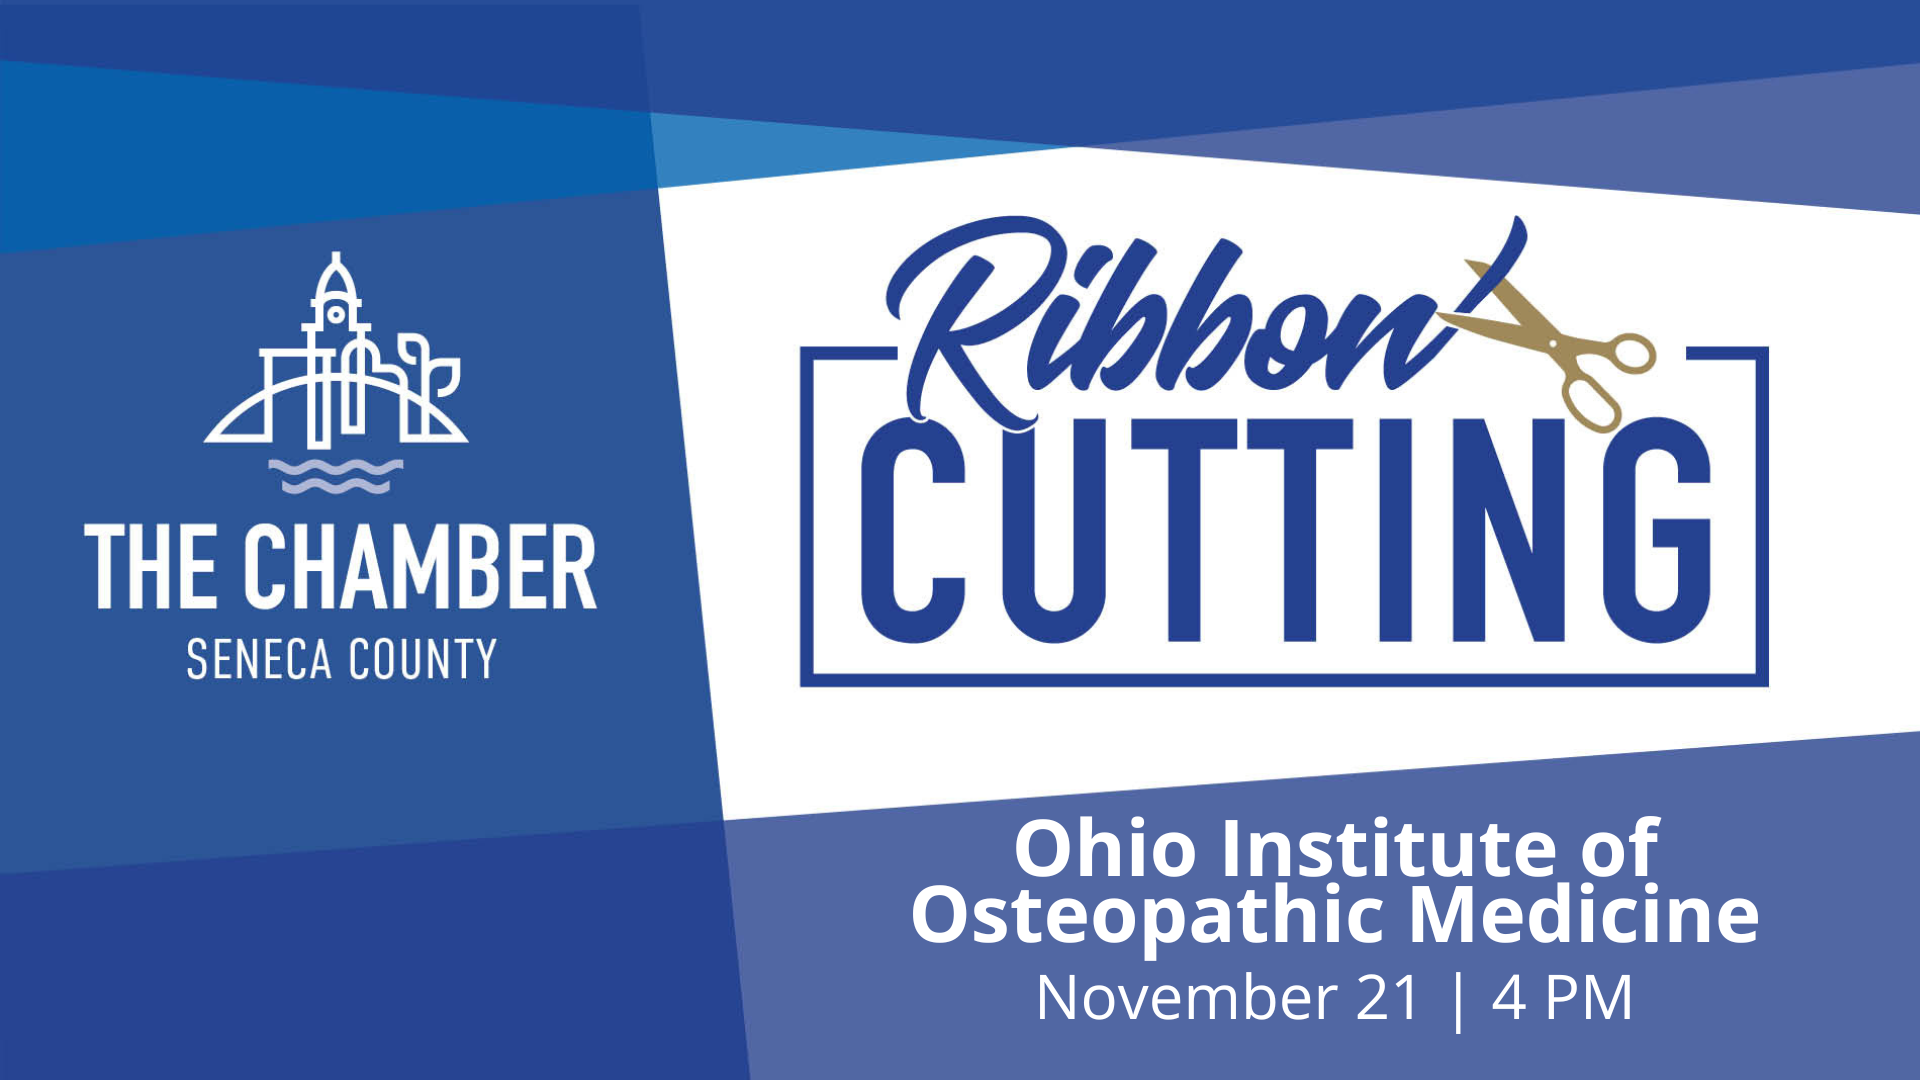 Seneca Regional Chamber: Ribbon Cutting & Open House Ohio Institute of Osteopathic Medicine